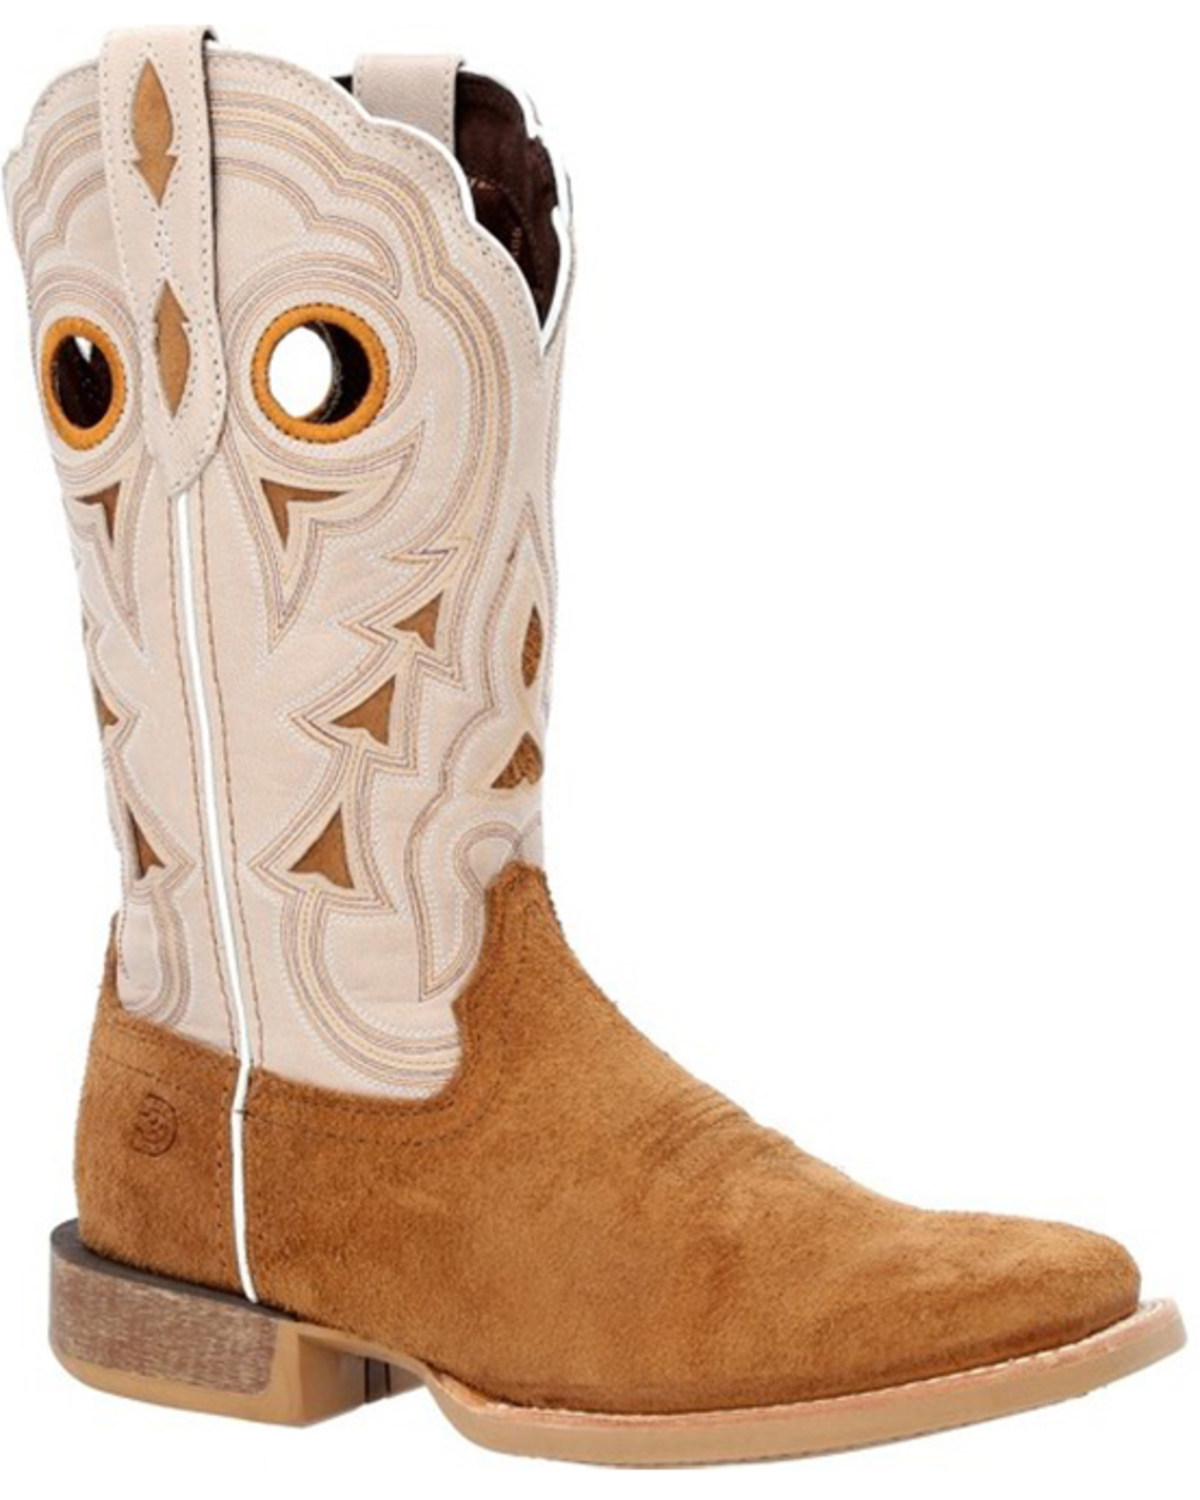 Durango Women's Lady Rebel Pro Cashew Western Boots - Broad Square Toe